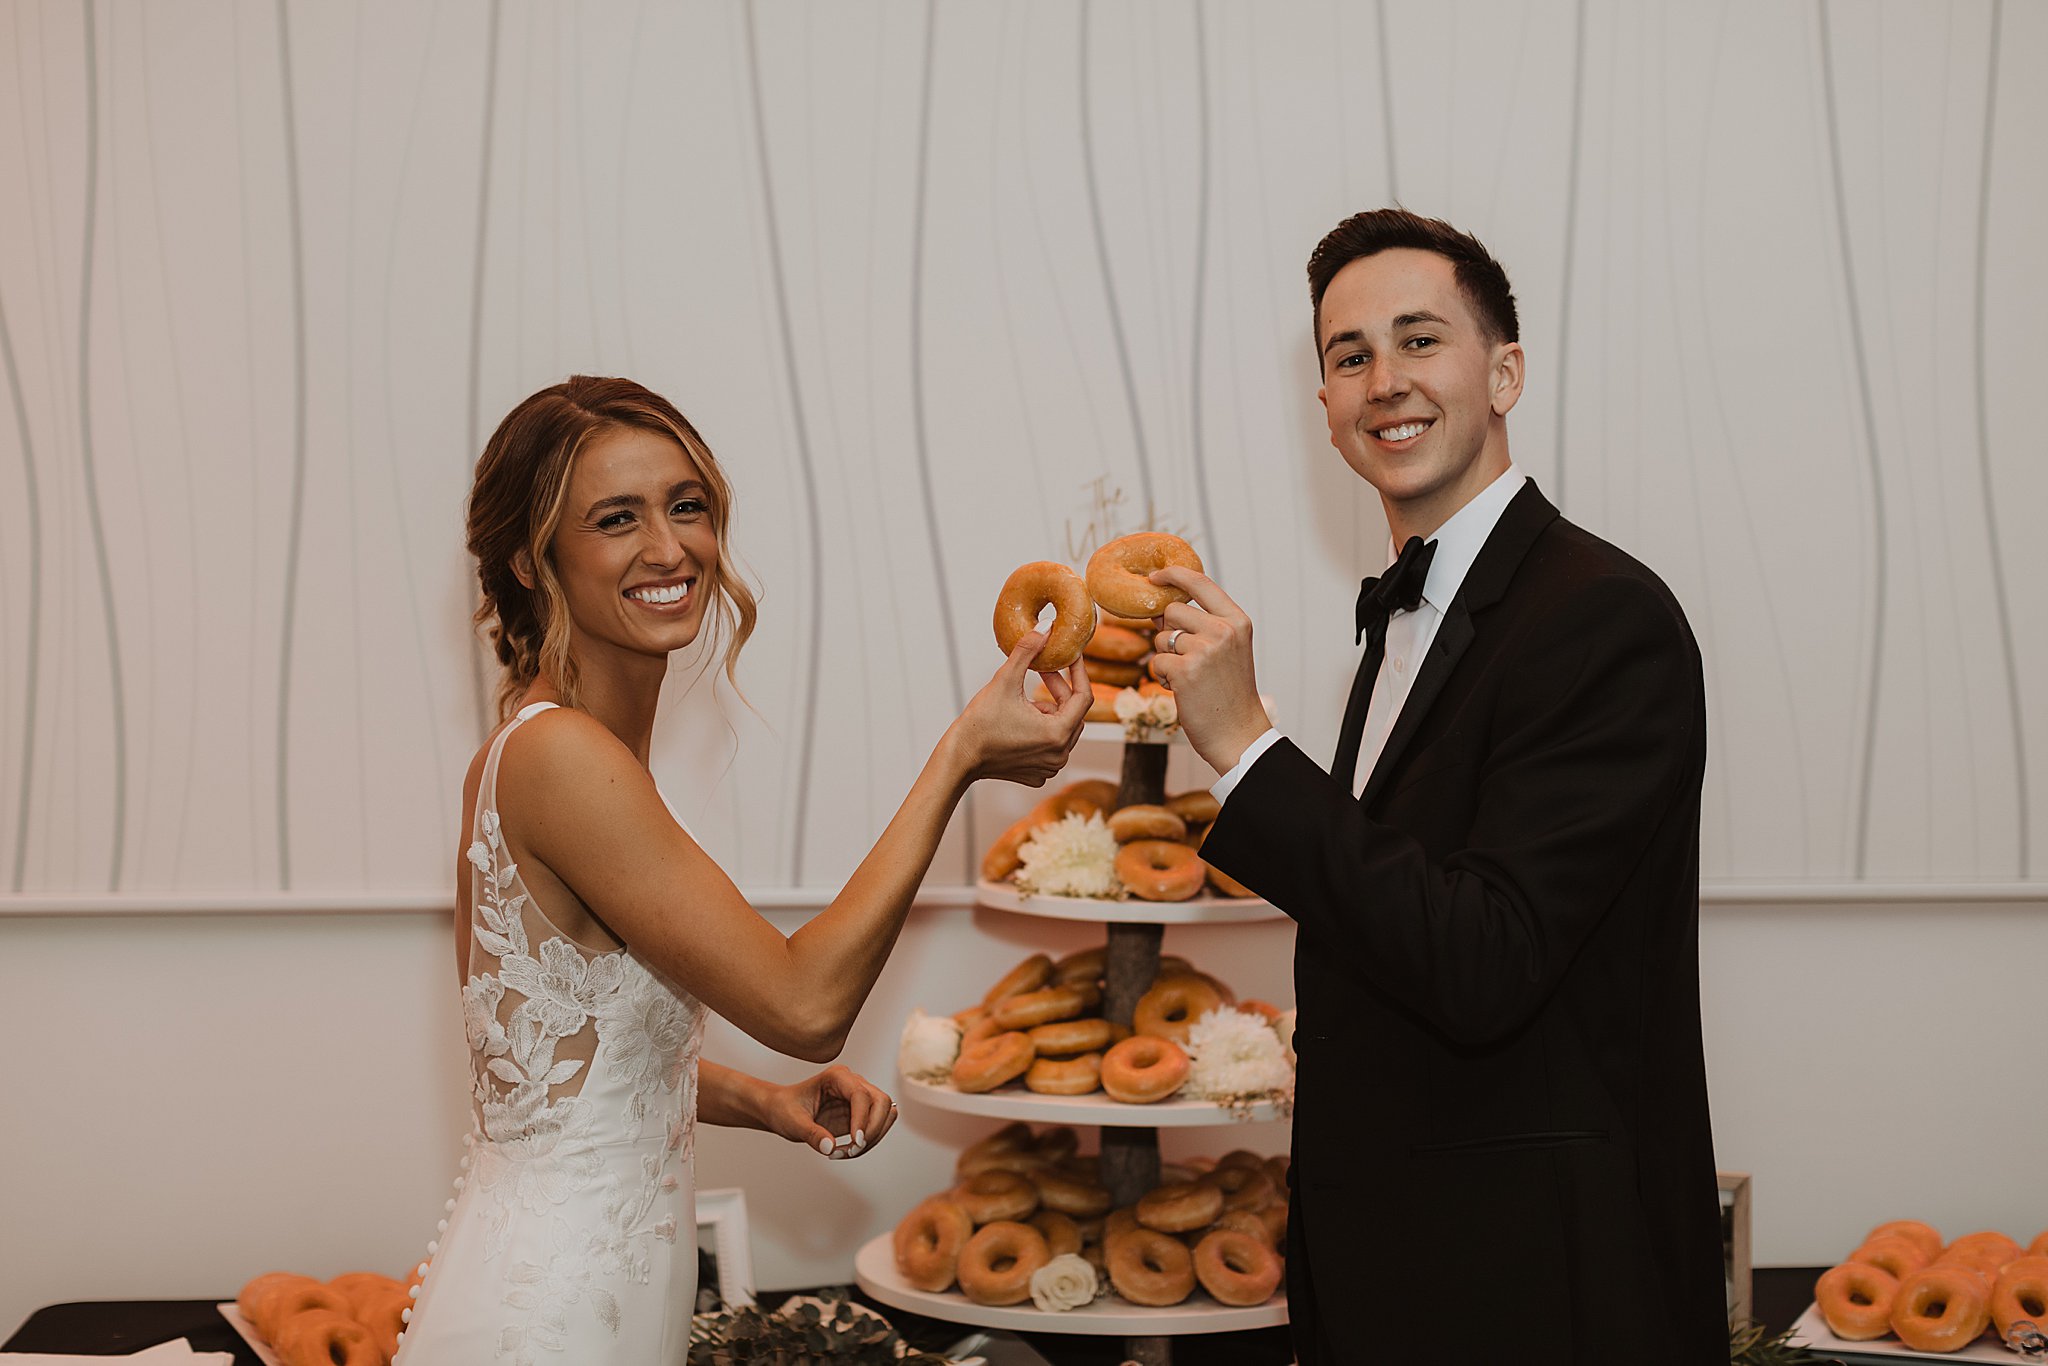 Saint Louis Wedding Reception | Donut Tower